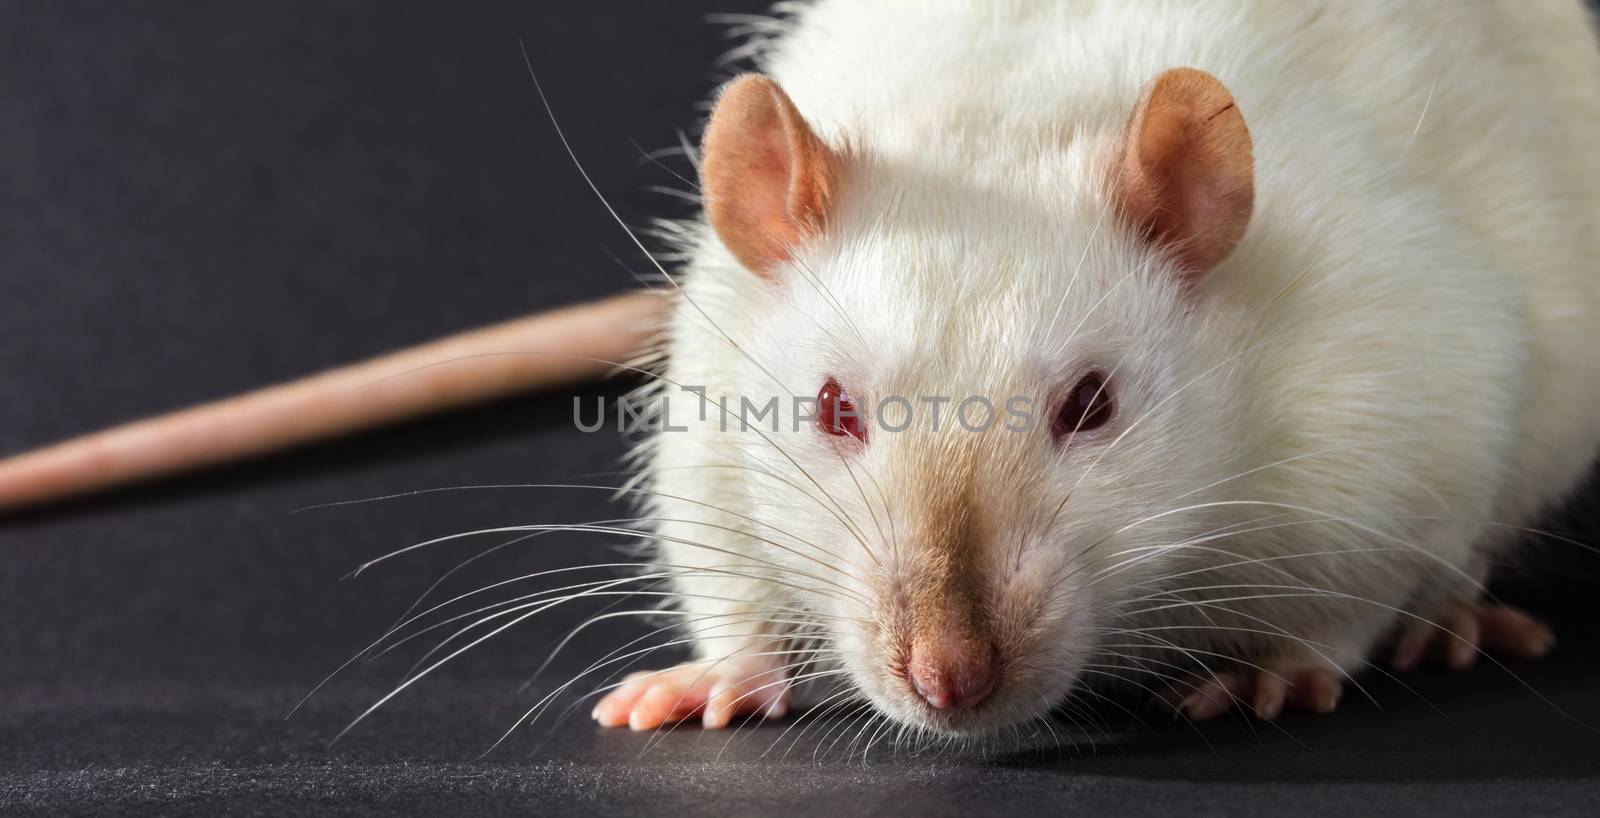 animal white rat close-up on a black background